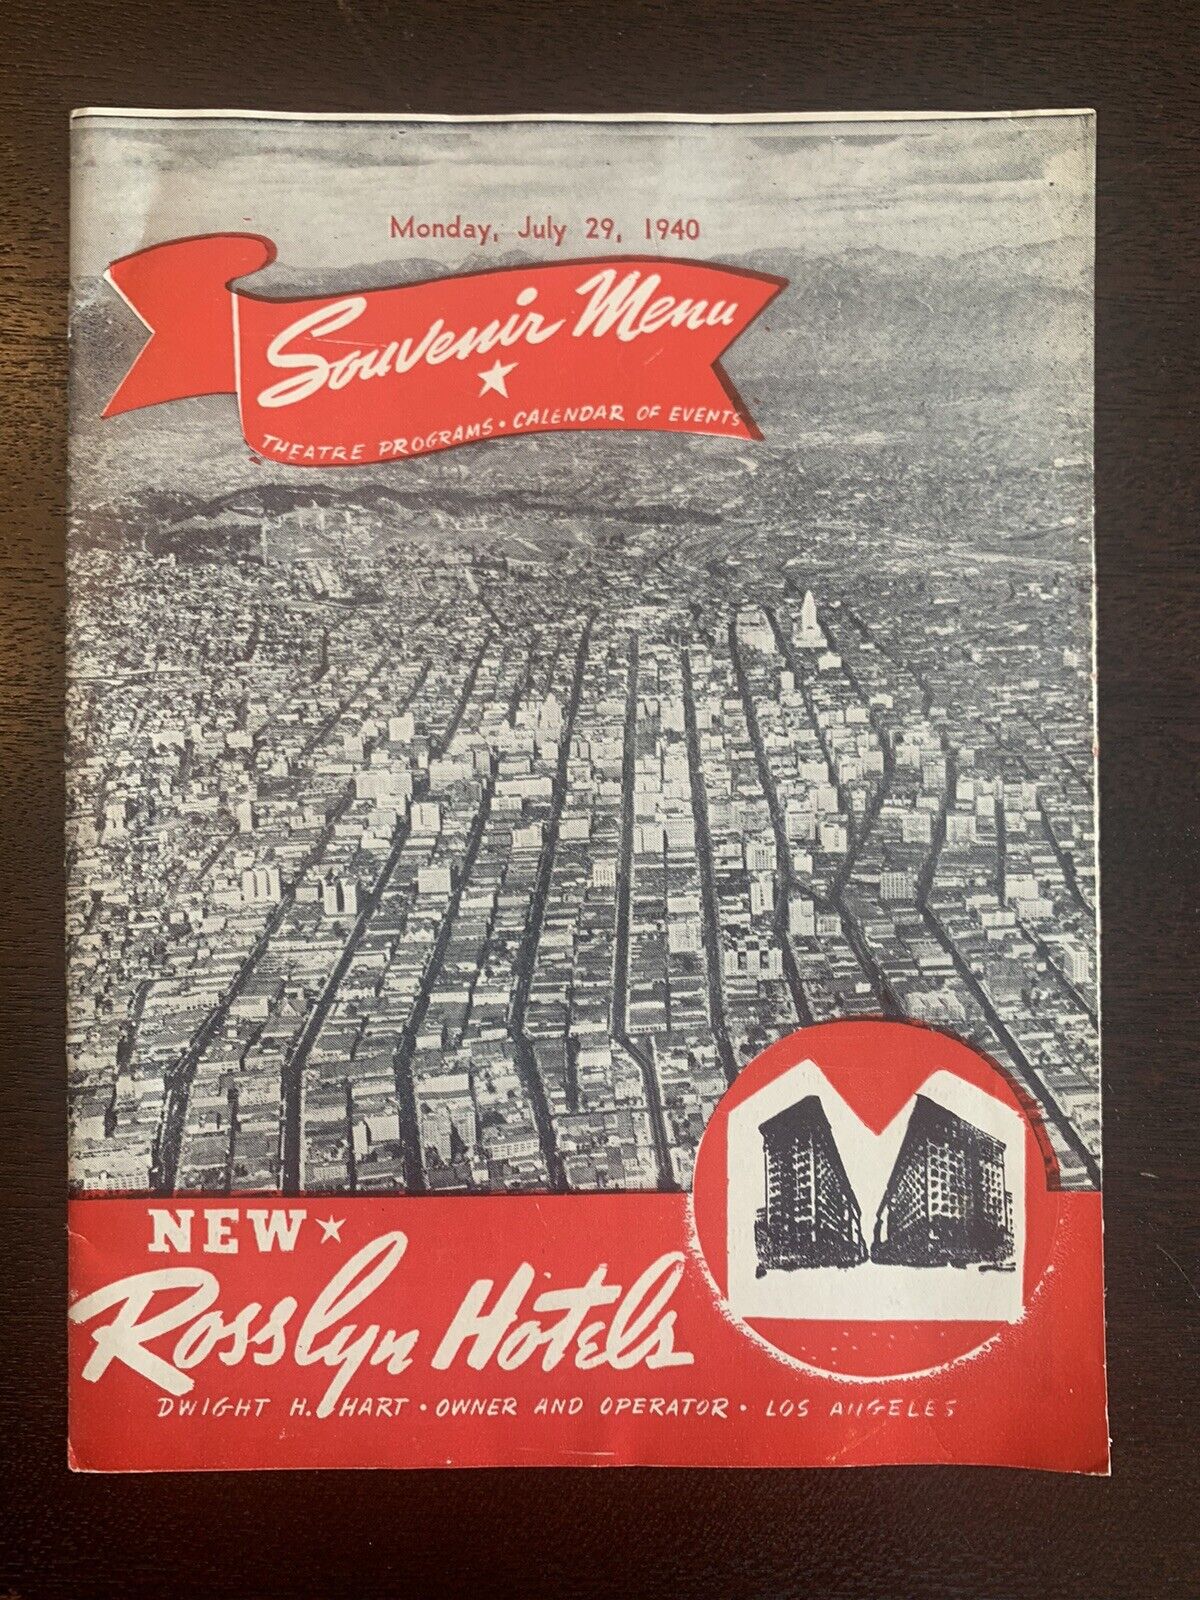 VTG Rosslyn Hotels Los Angeles Souvenir Menu Theater & Events Program  1940